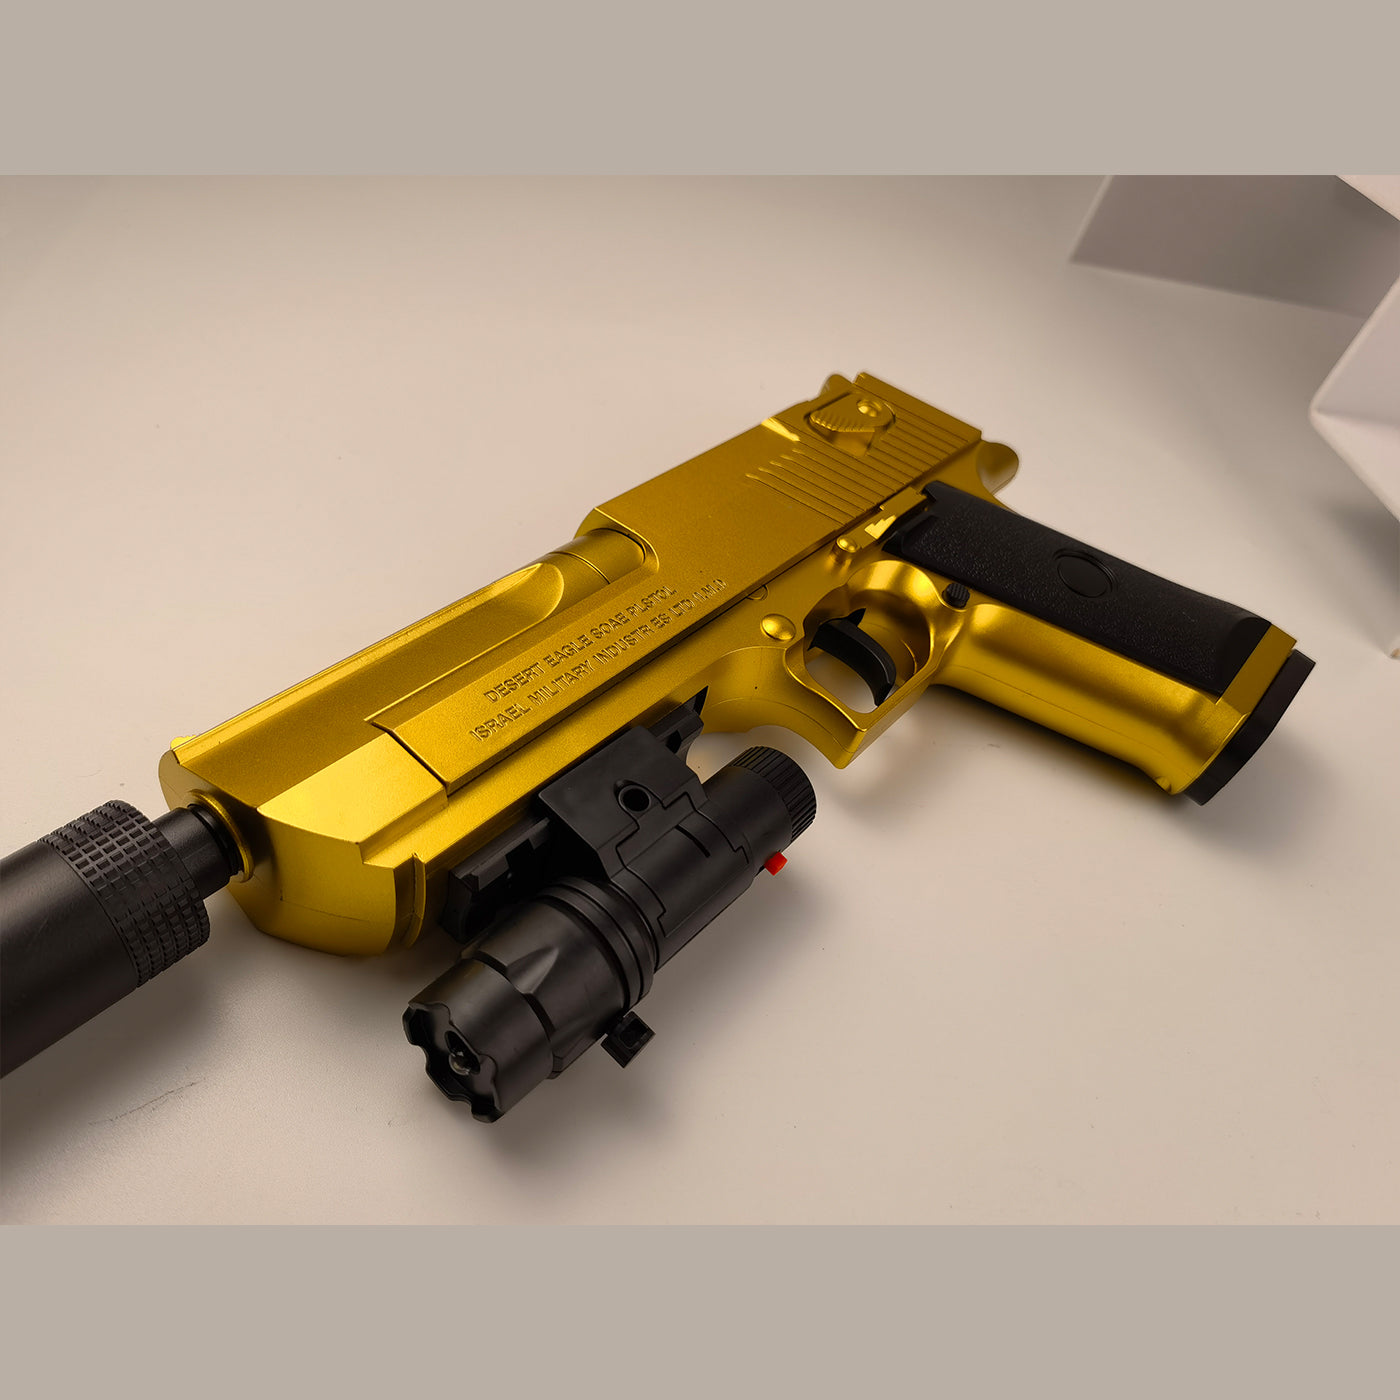 JM Glock Gel Blaster Golden  gelblasterbest   